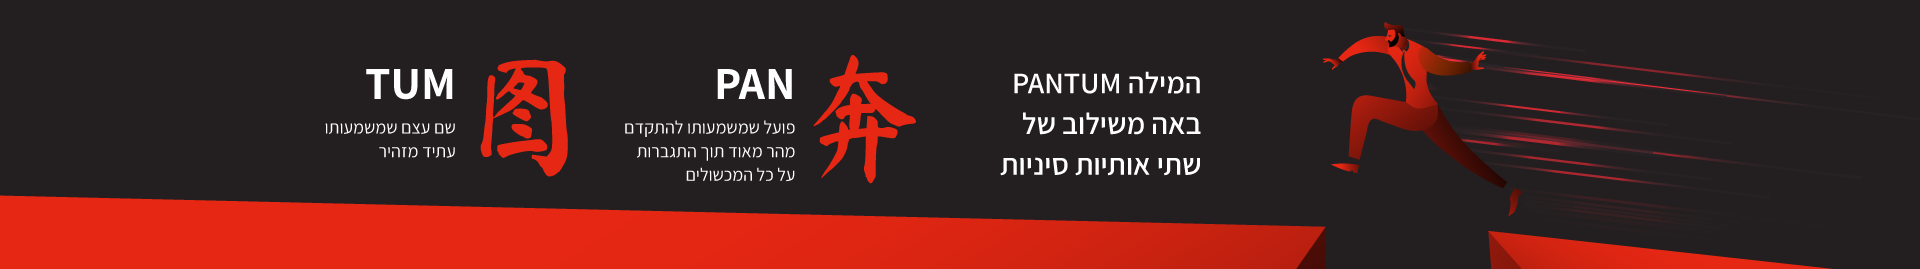 pantum-campaign